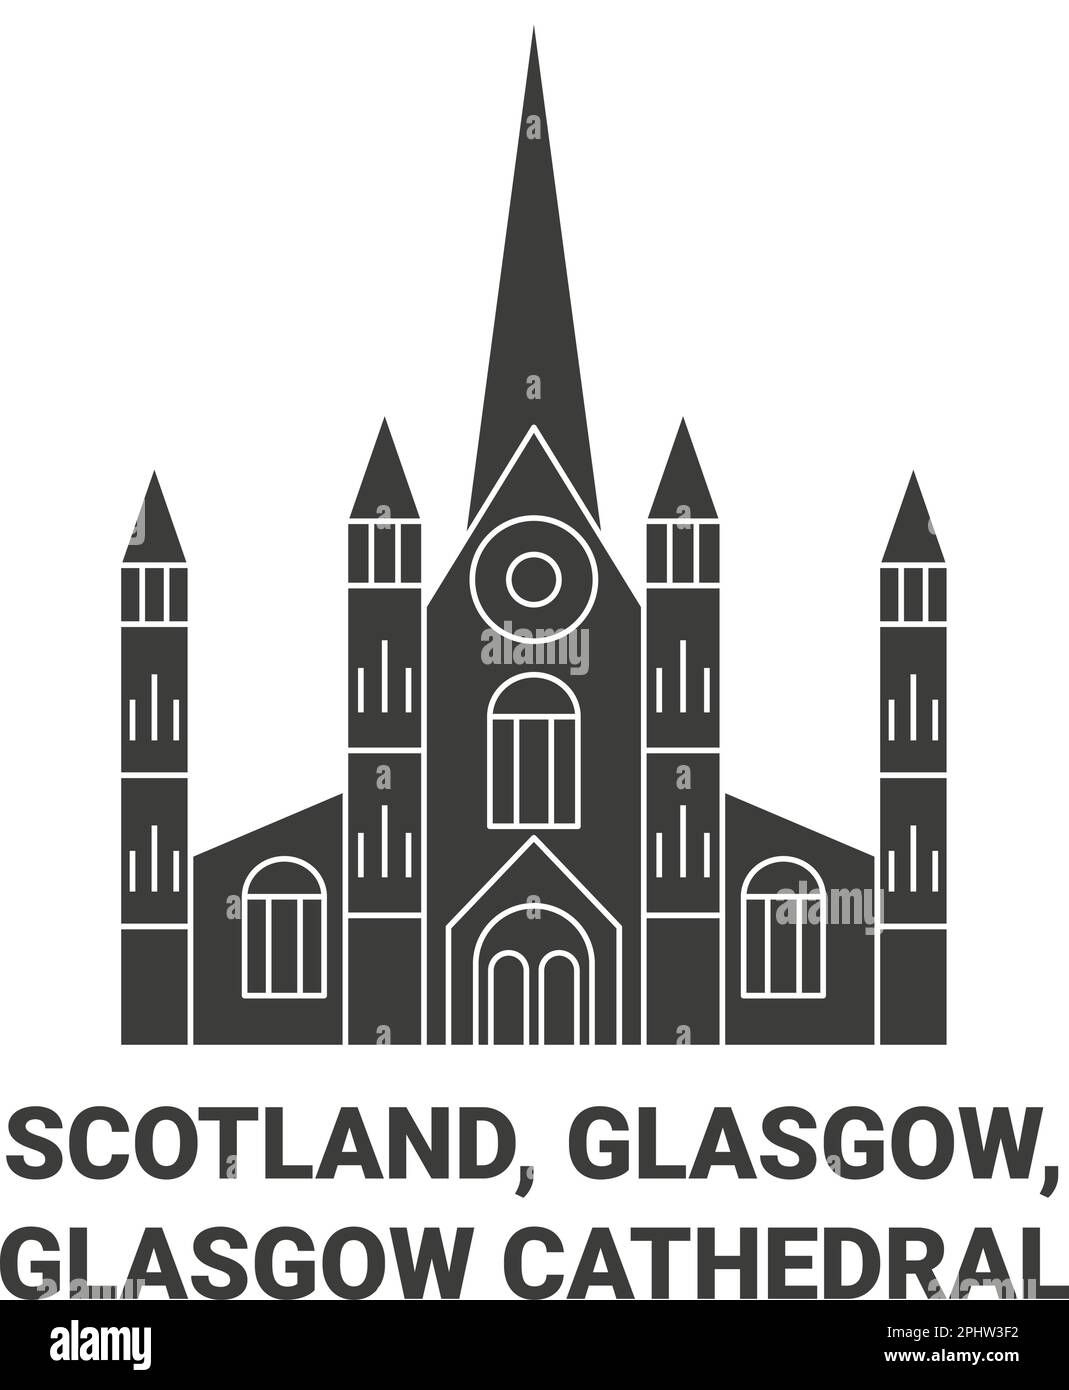 Scotland, Glasgow, Glasgow Cathedral travel landmark vector illustration Stock Vector